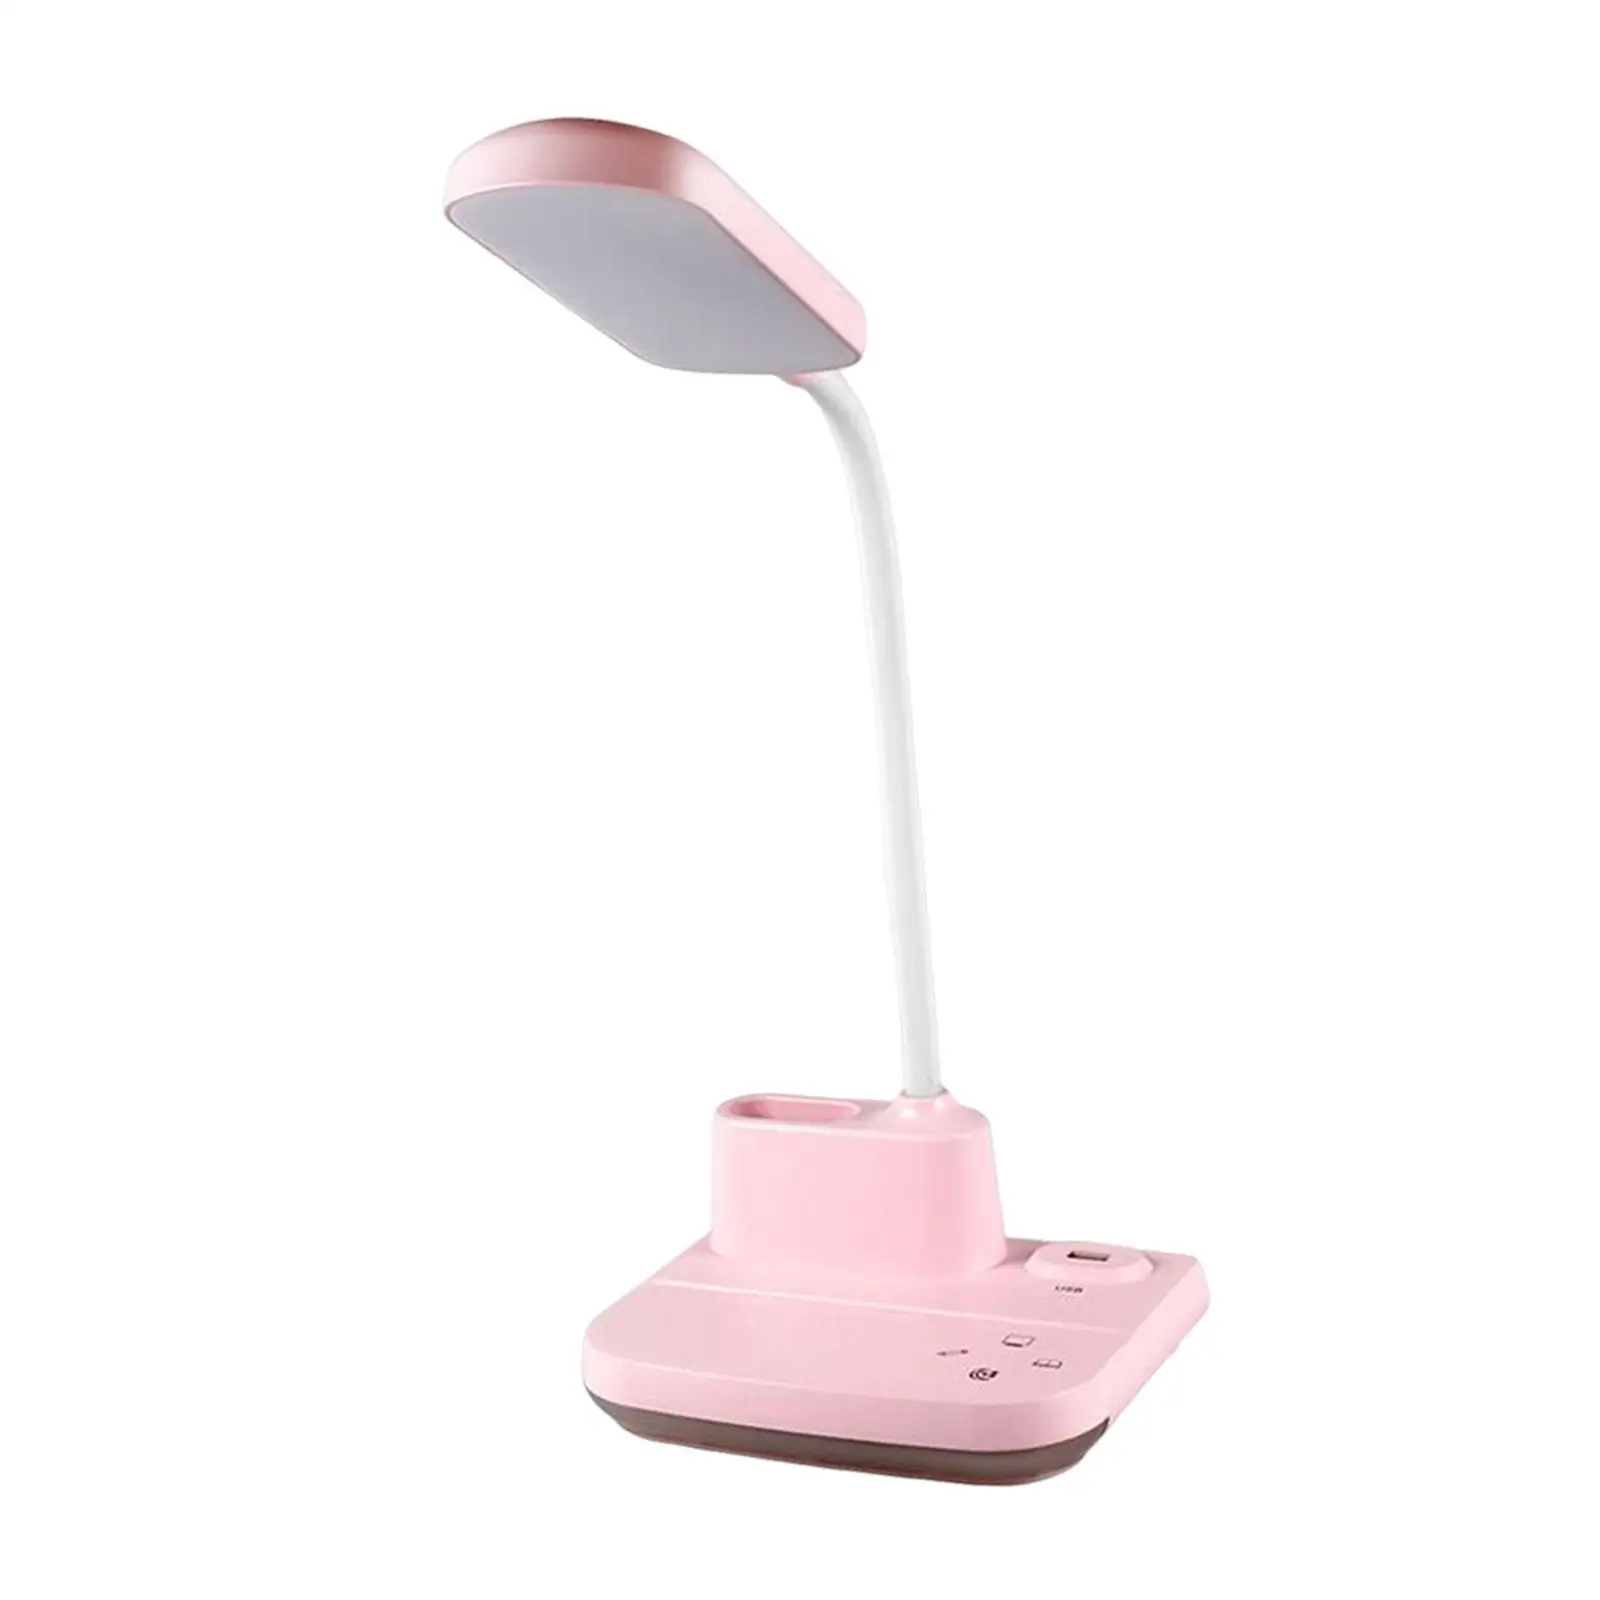 LED Desk Lamp Foldable Dimmable Table Lamp Office Lamp Bedside Reading Light for Desktop Dorm Study Room Bedrooms Home